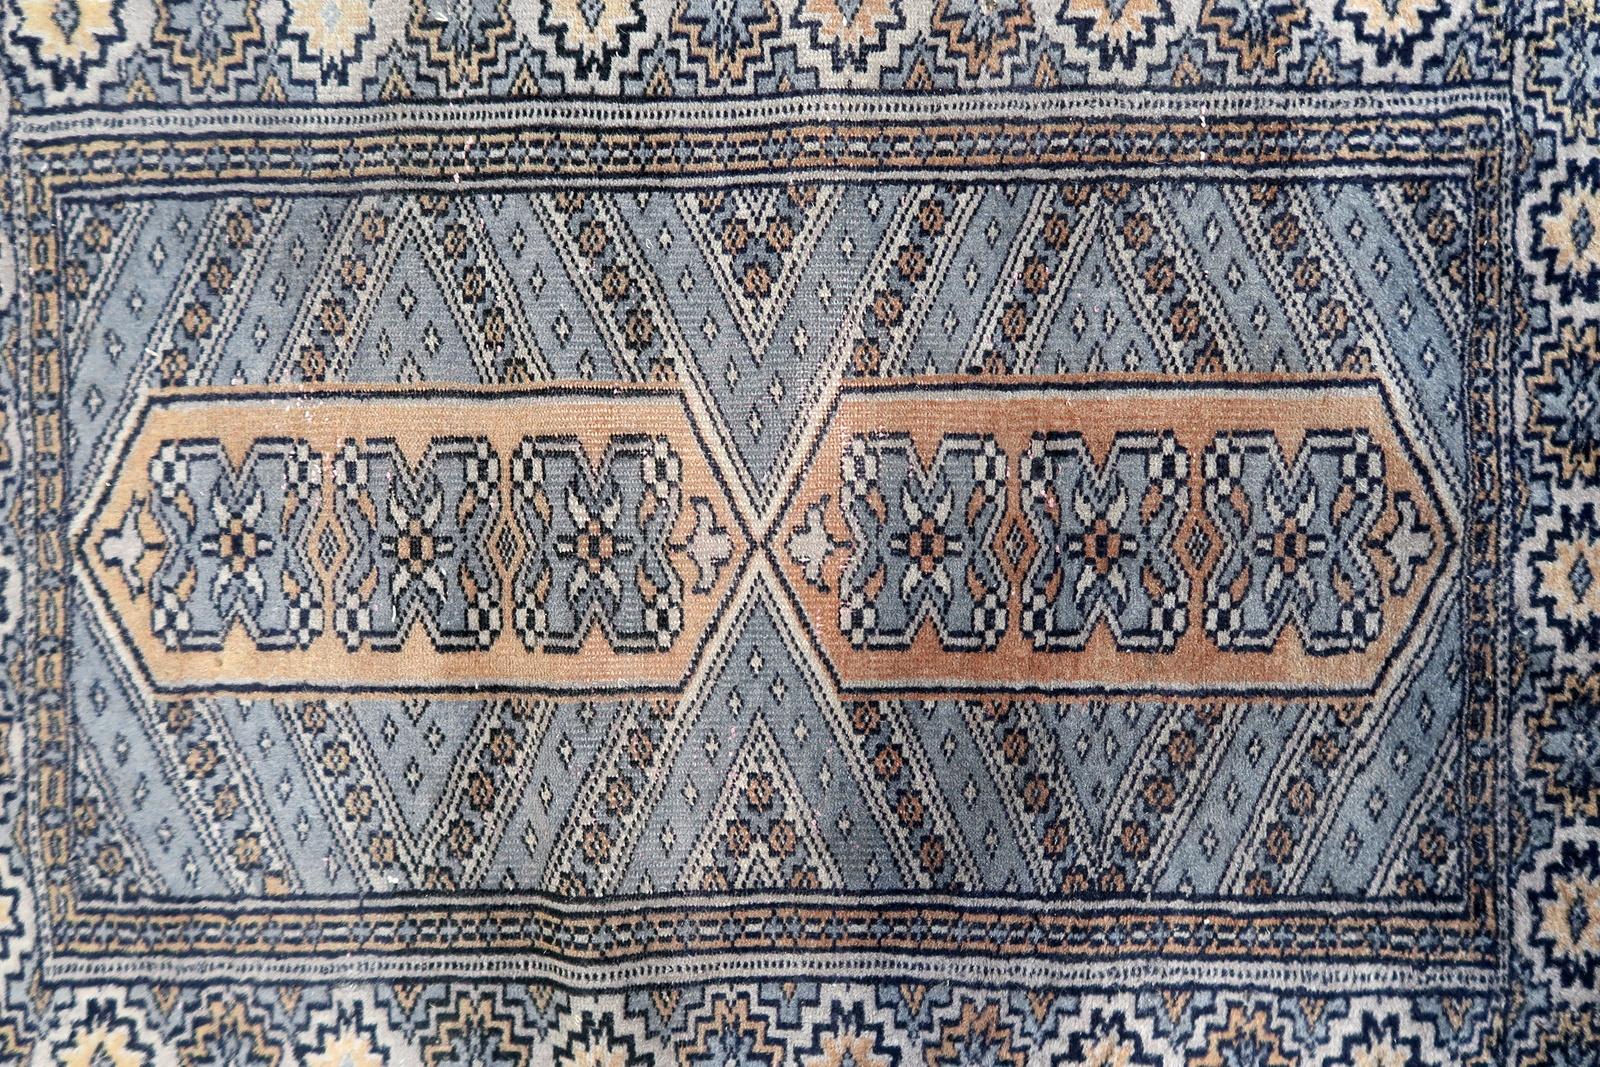 Mid-20th Century Handmade Vintage Uzbek Bukhara Rug 2' x 3.1', 1950s - 1C1144 For Sale